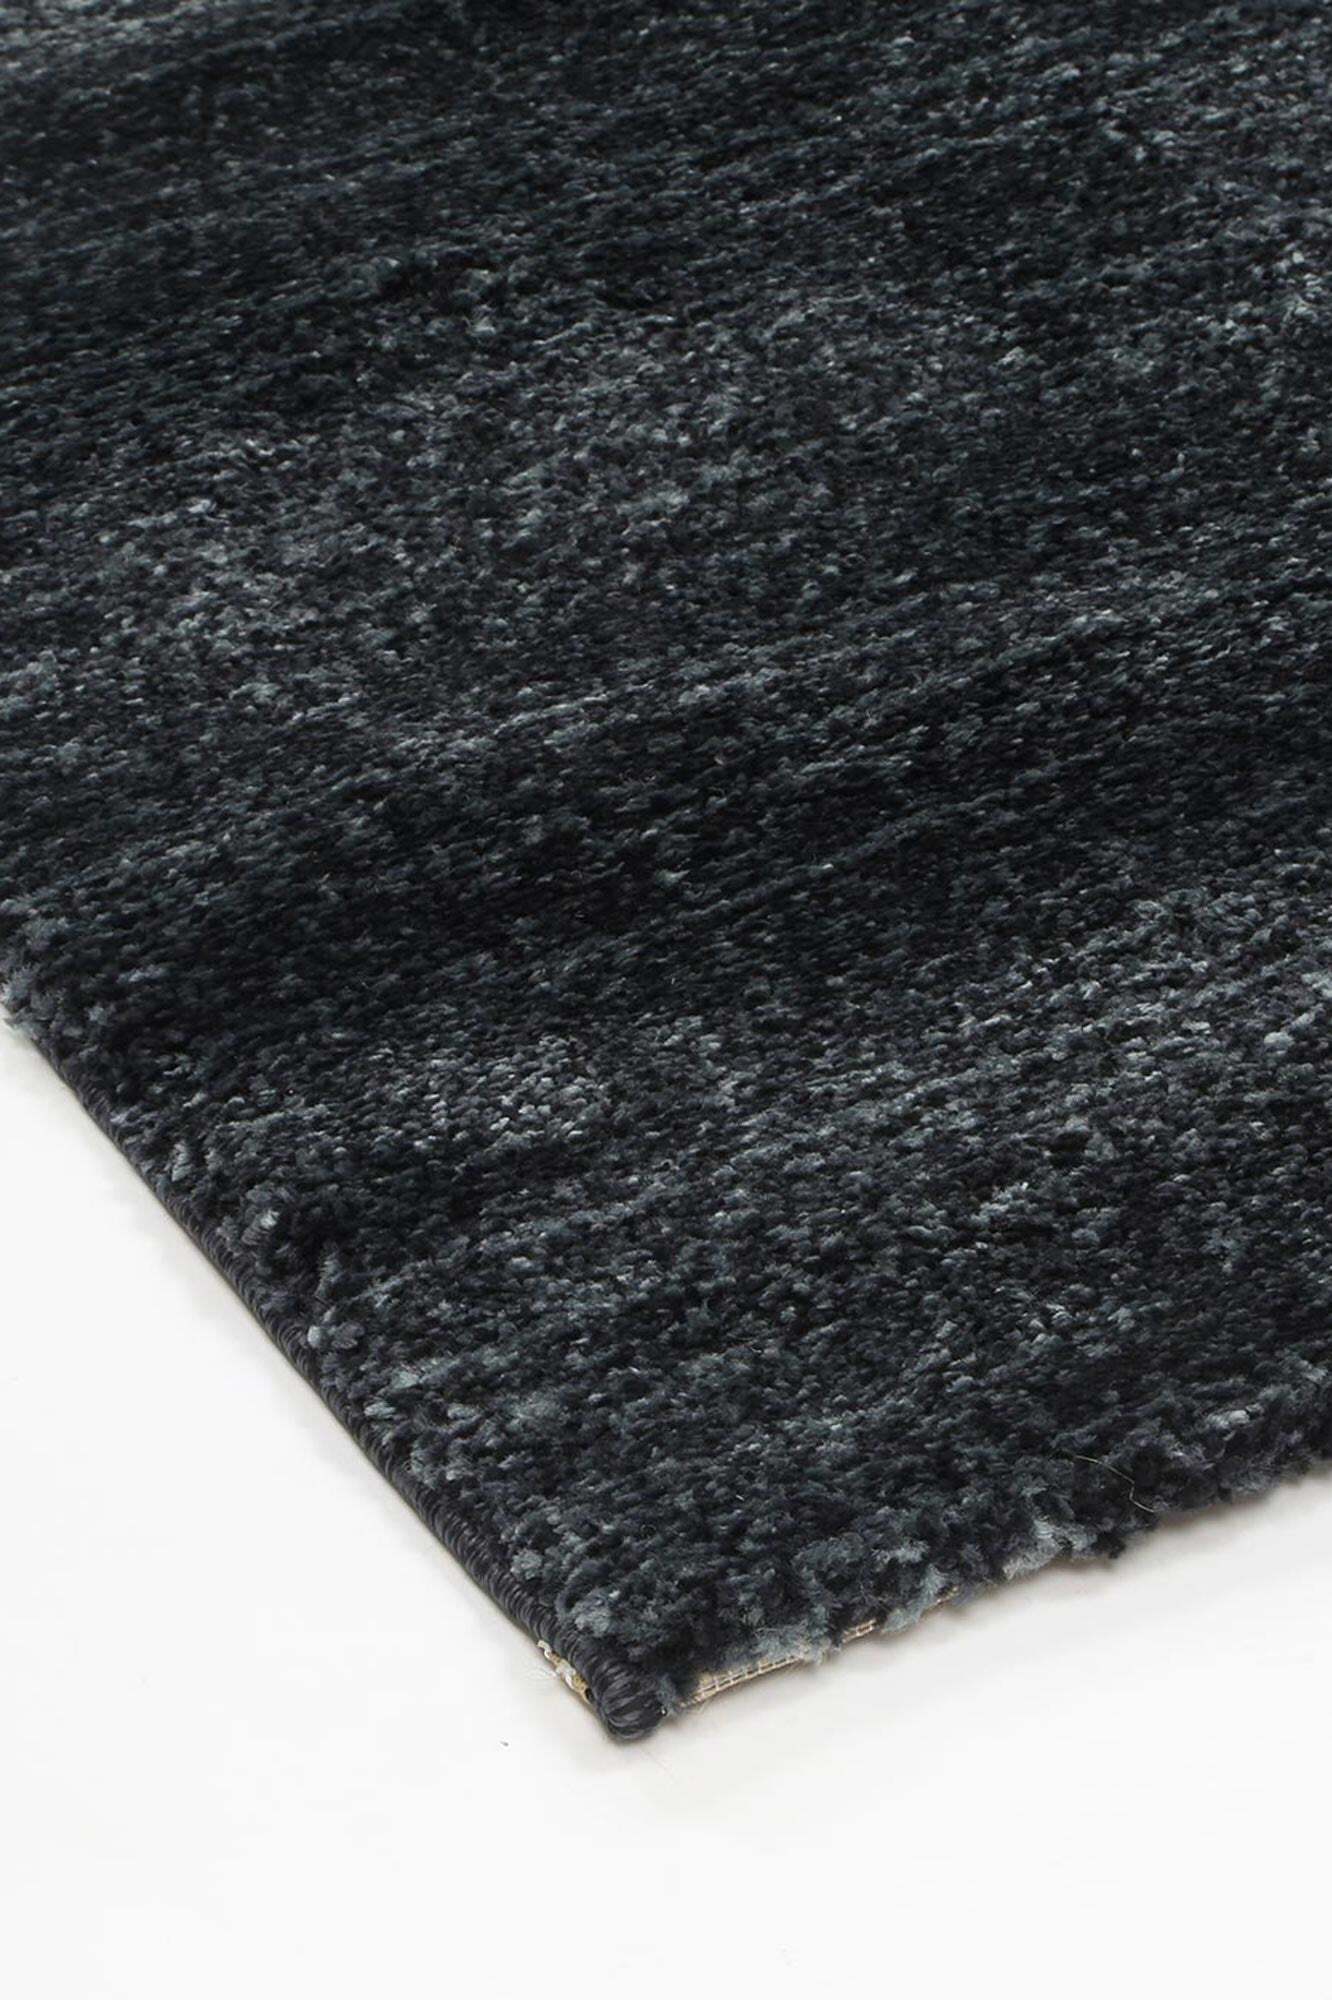 Pave Plain Modern Black Rug